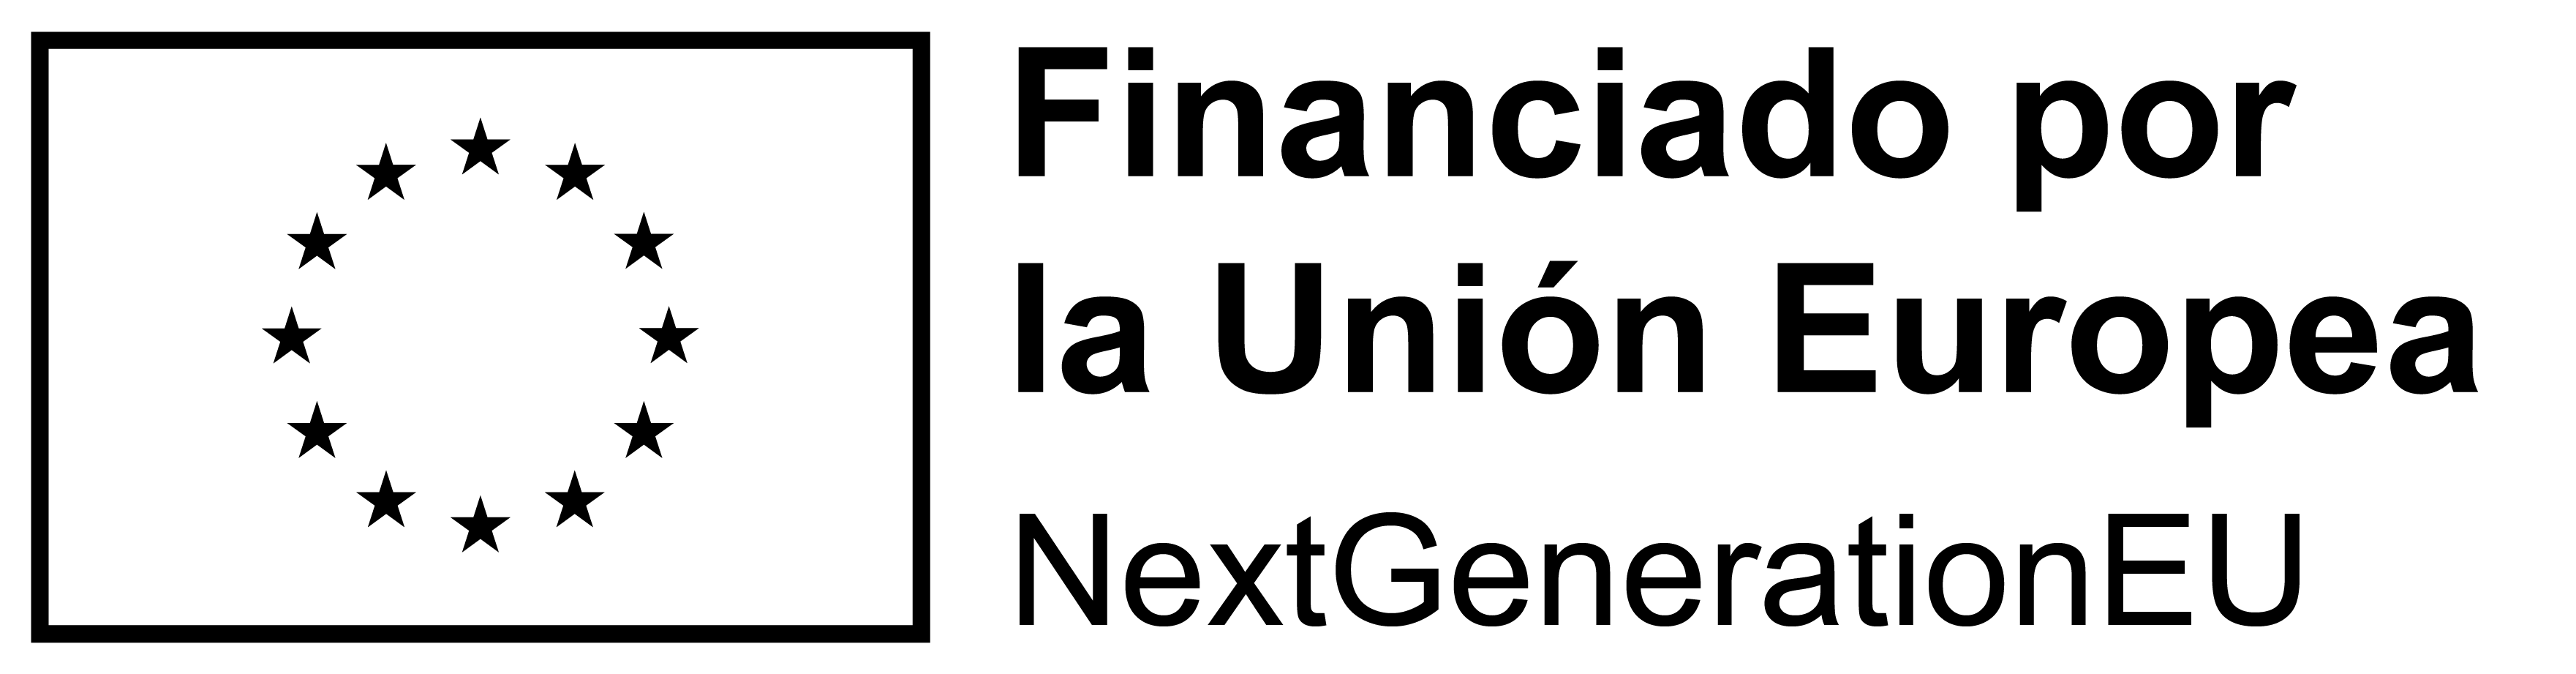 logo-legal02